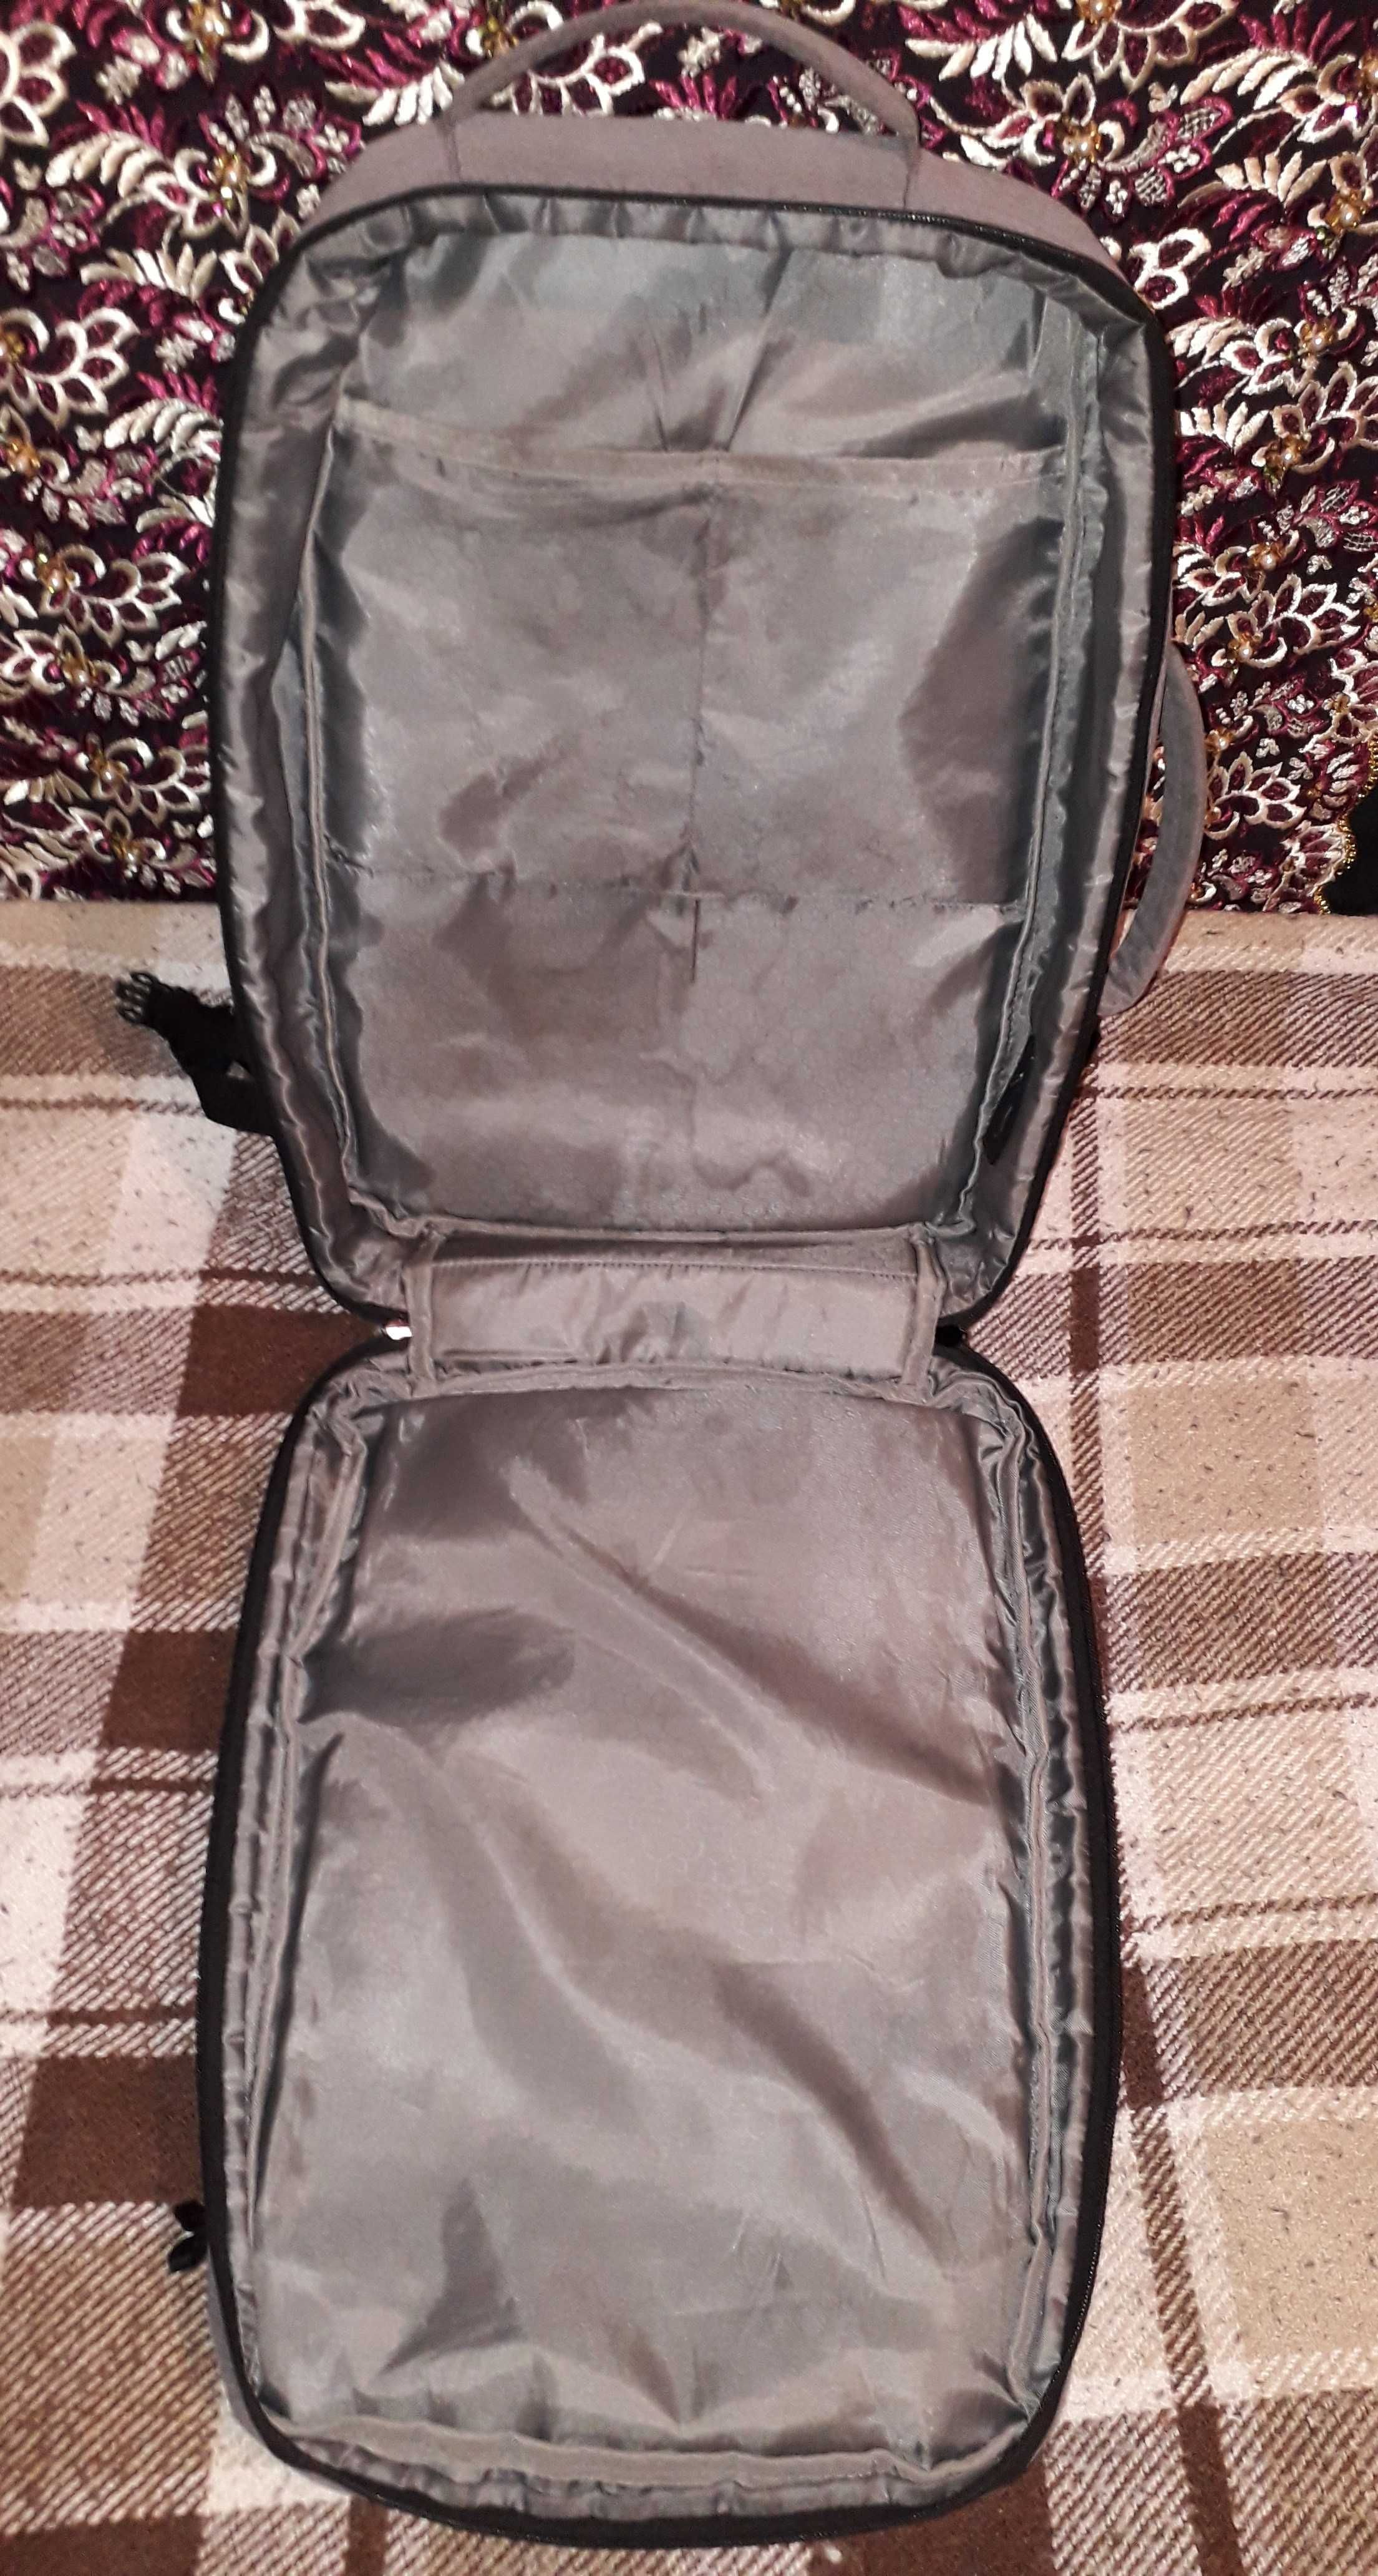 Рюкзак-сумка для ноутбука SULKAN 17.3"